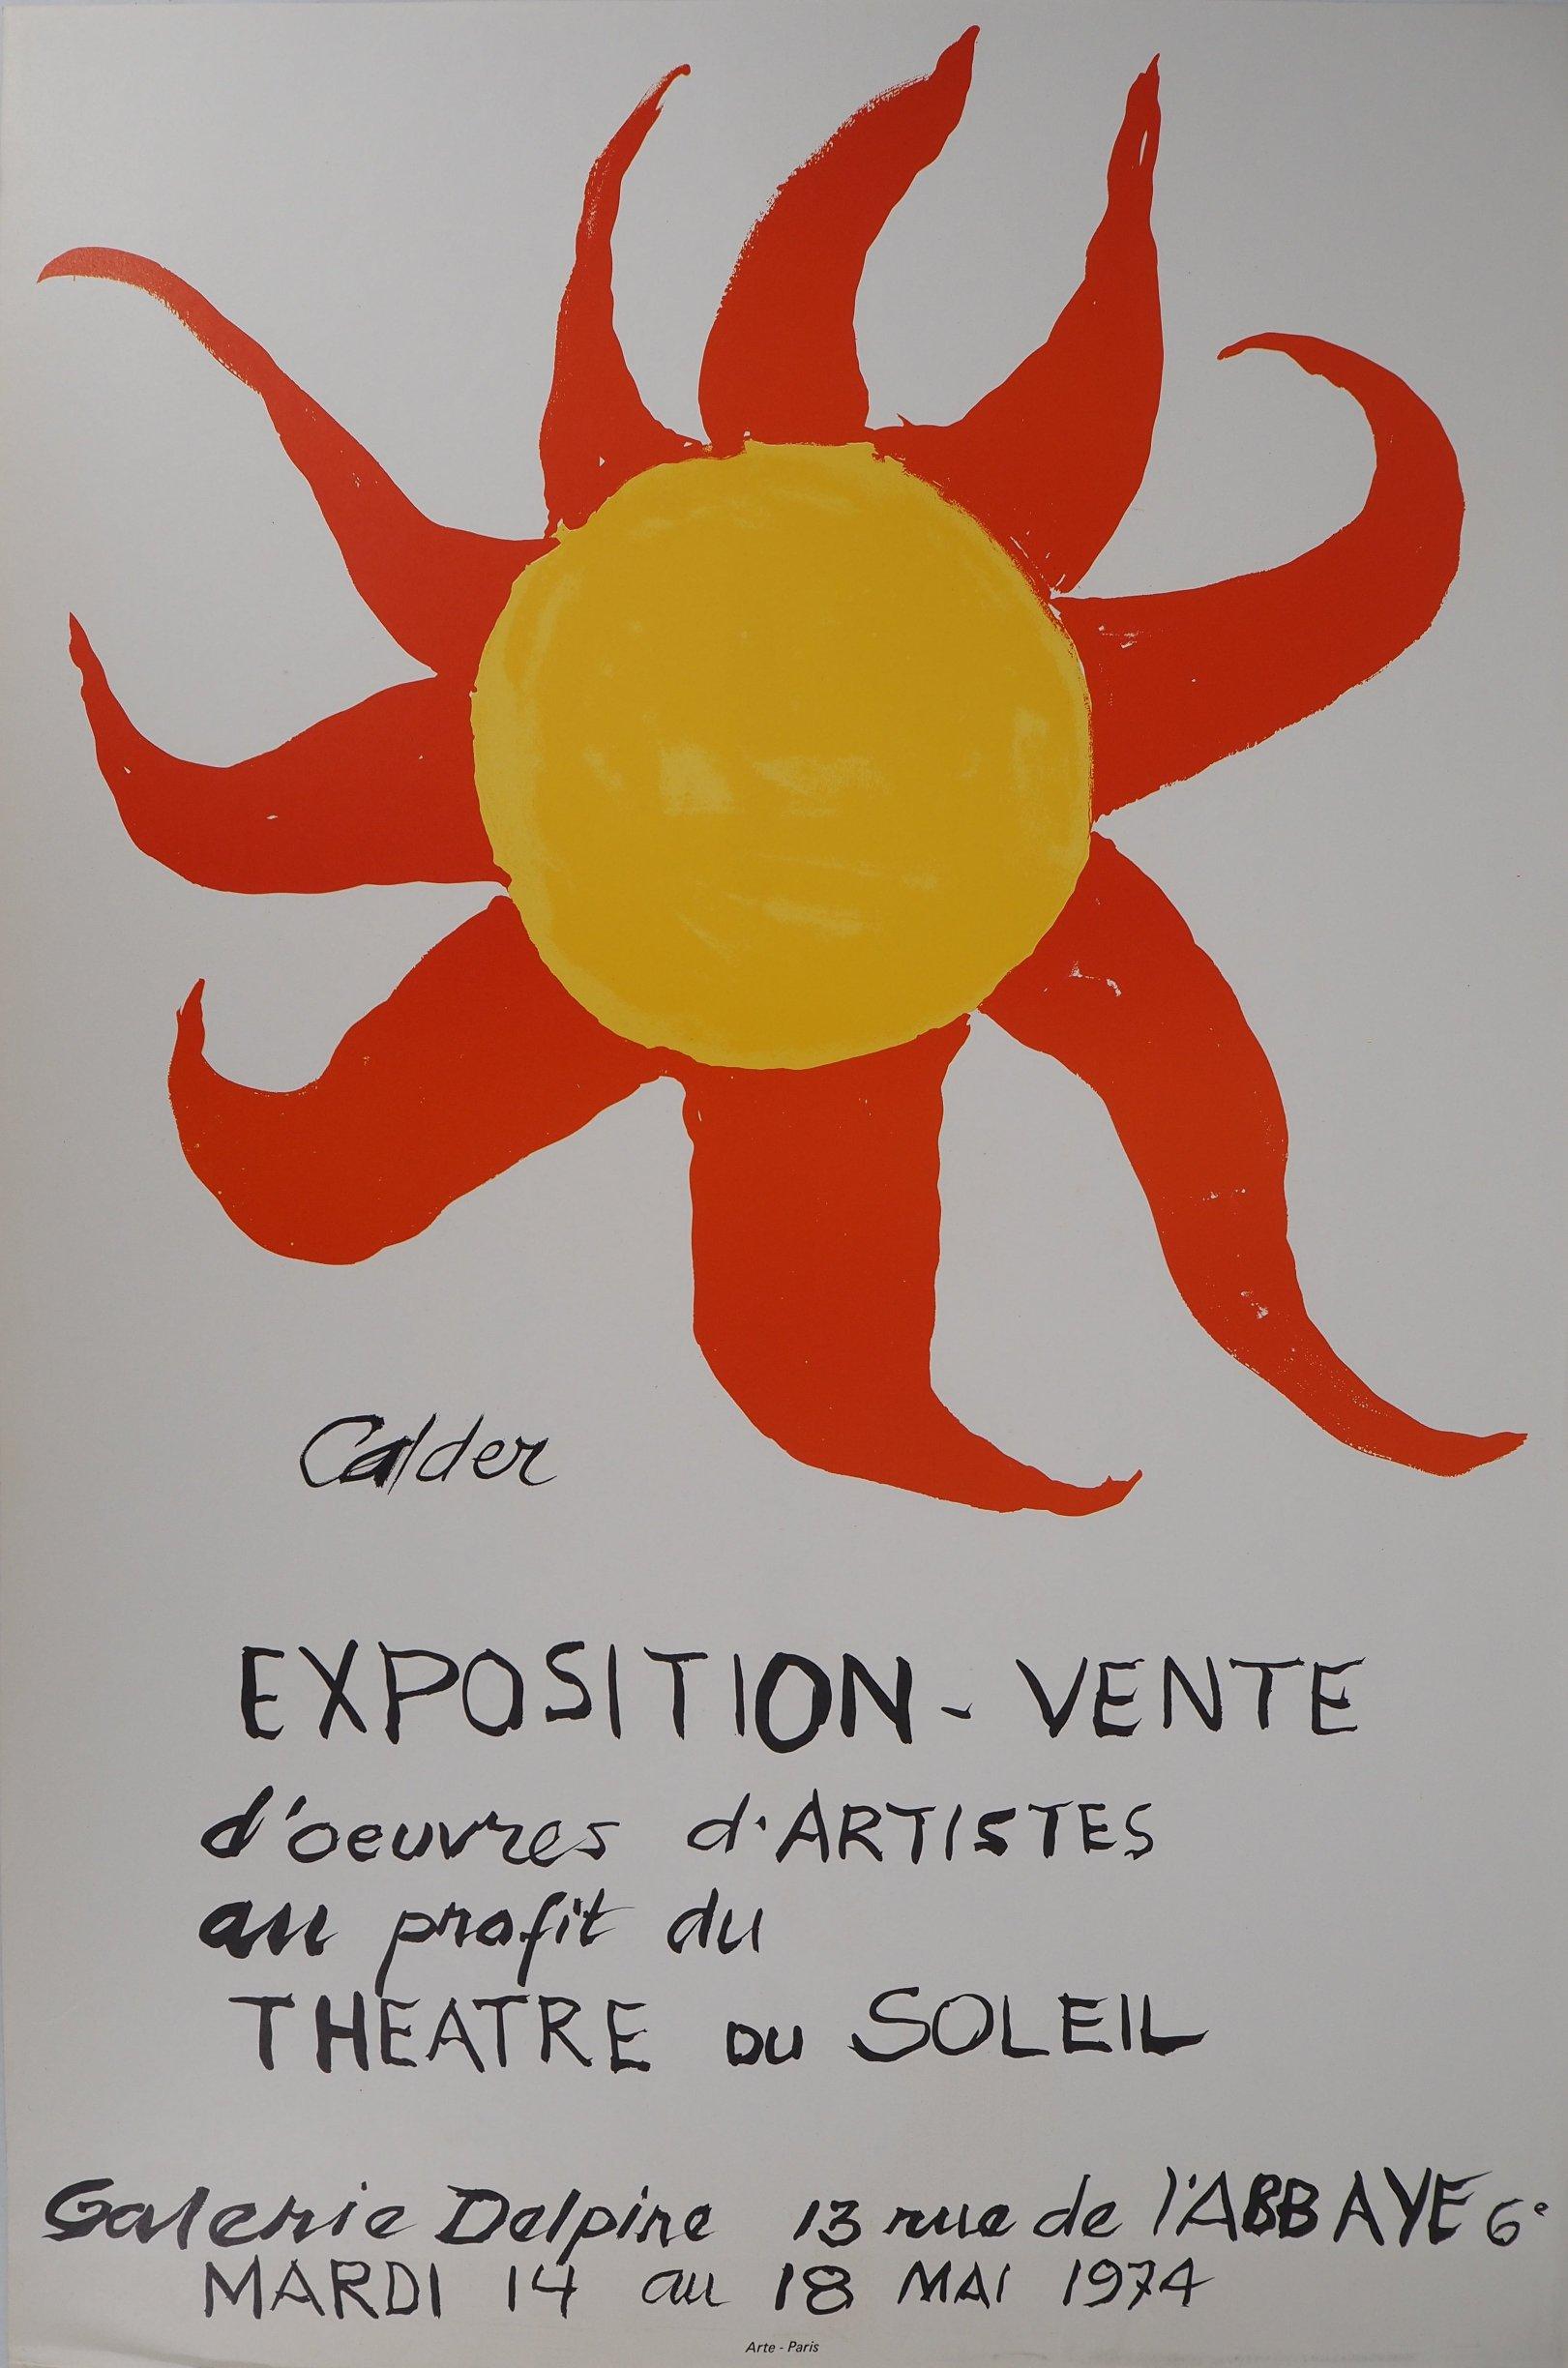 Alexander Calder Abstract Print - Shining Sun, 1974 - Original lithograph, Signed